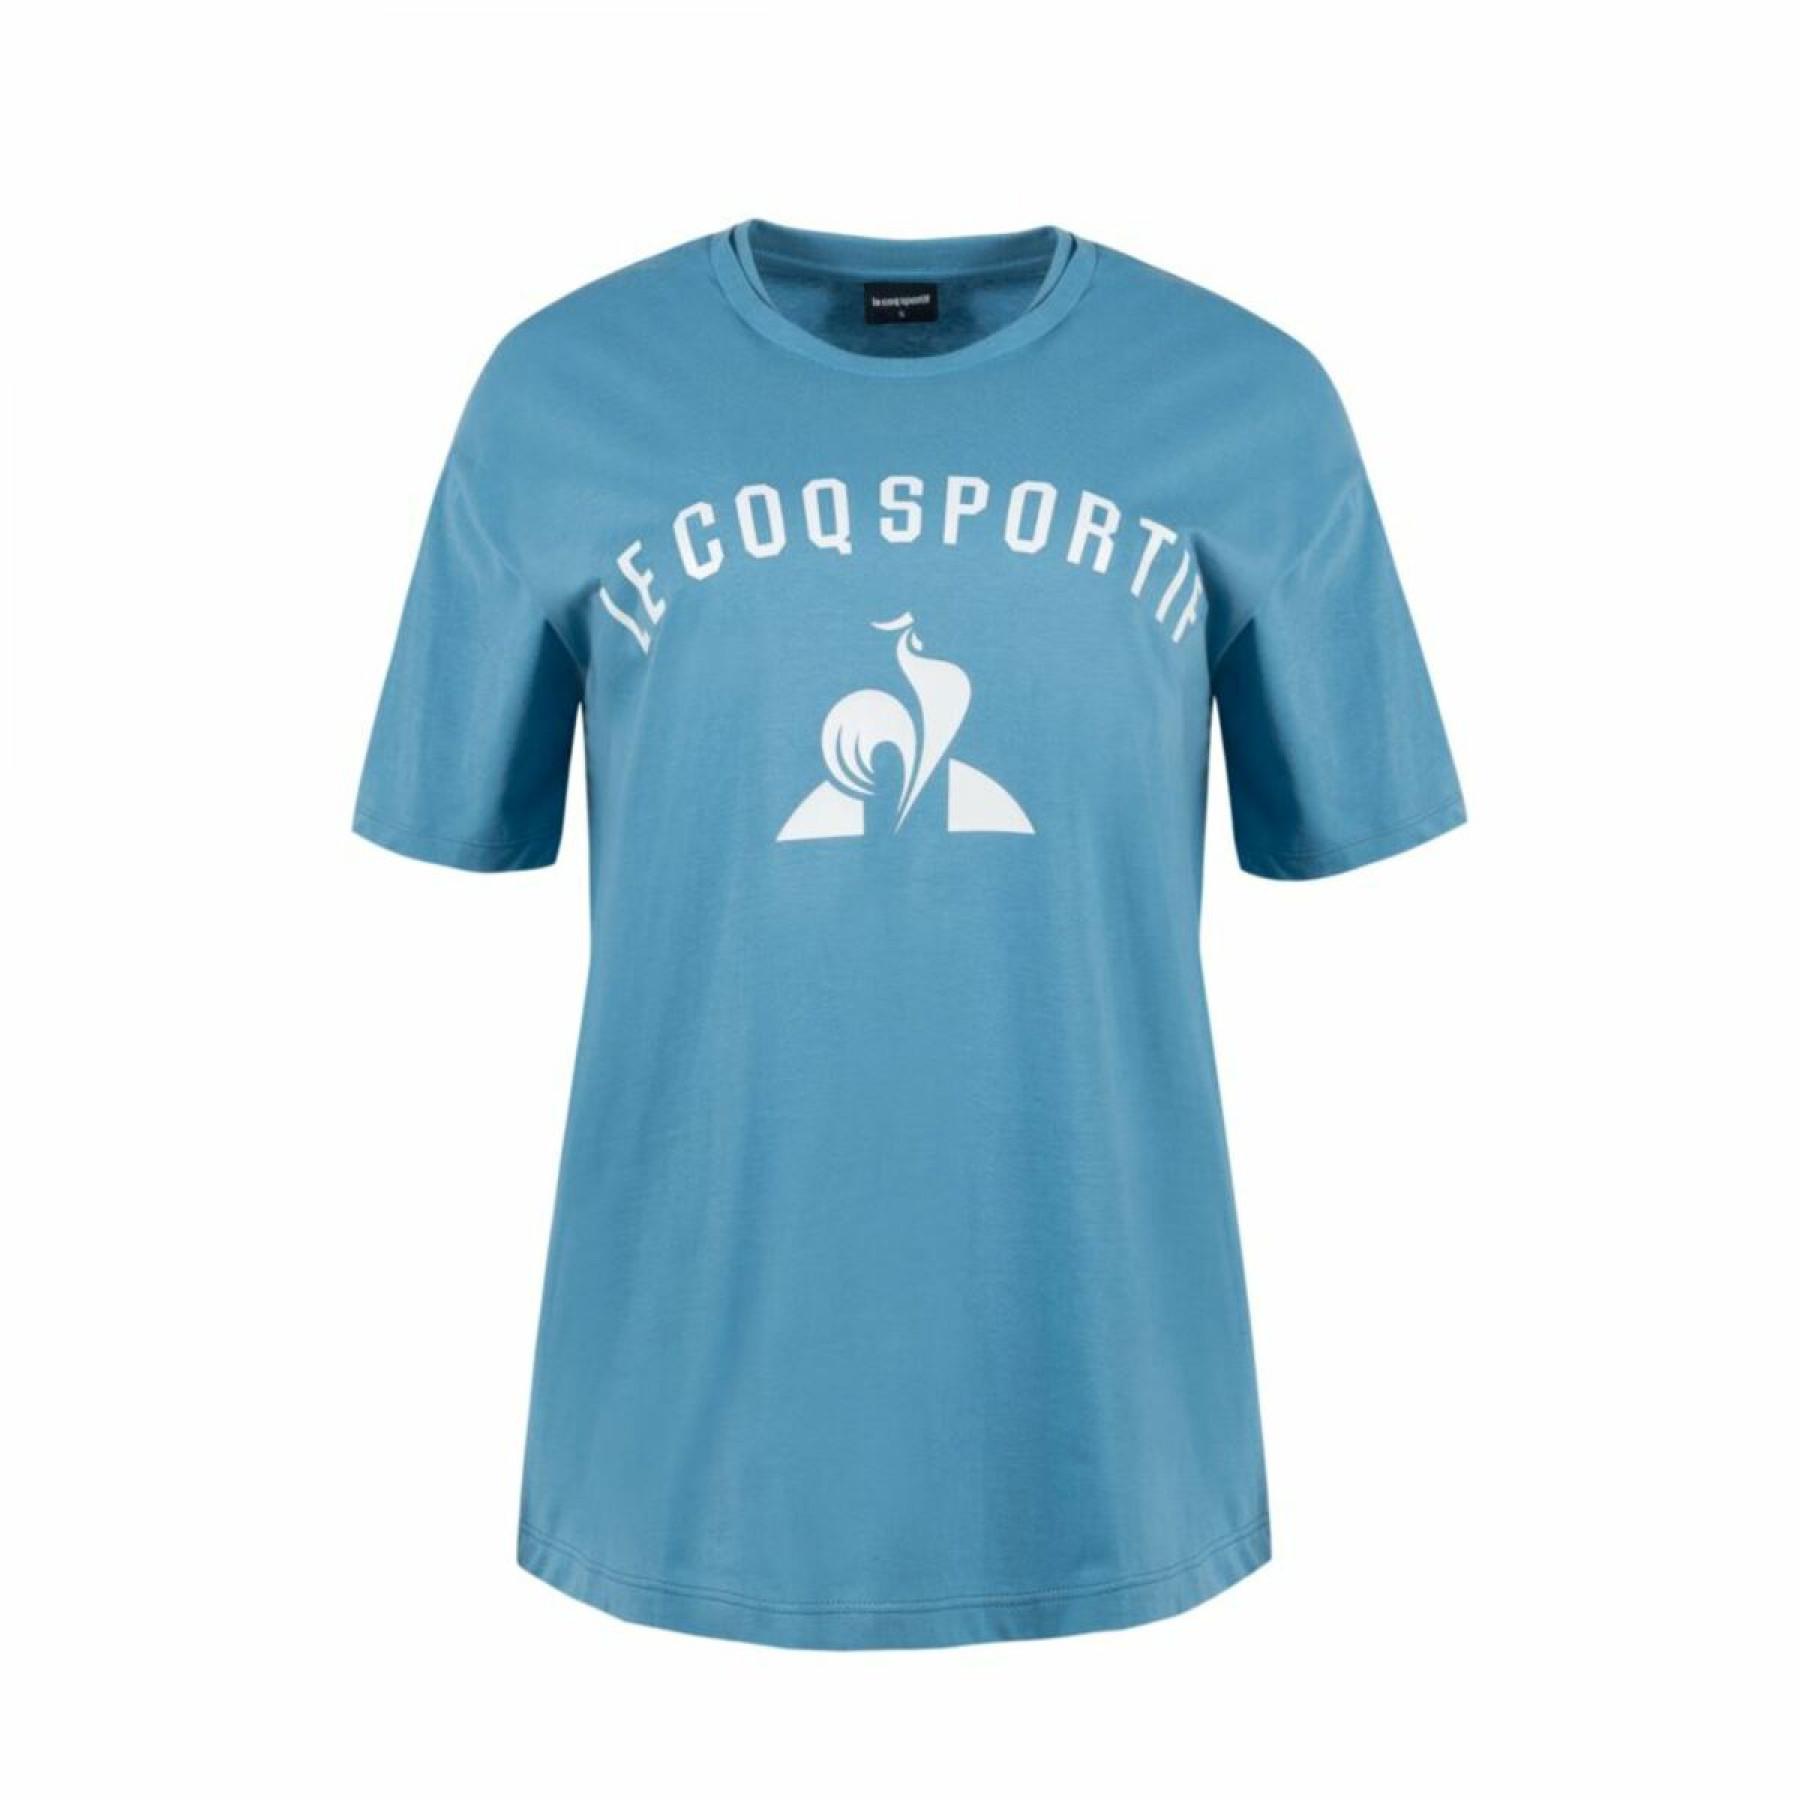 Camiseta de mujer Le Coq Sportif sport loose n°2